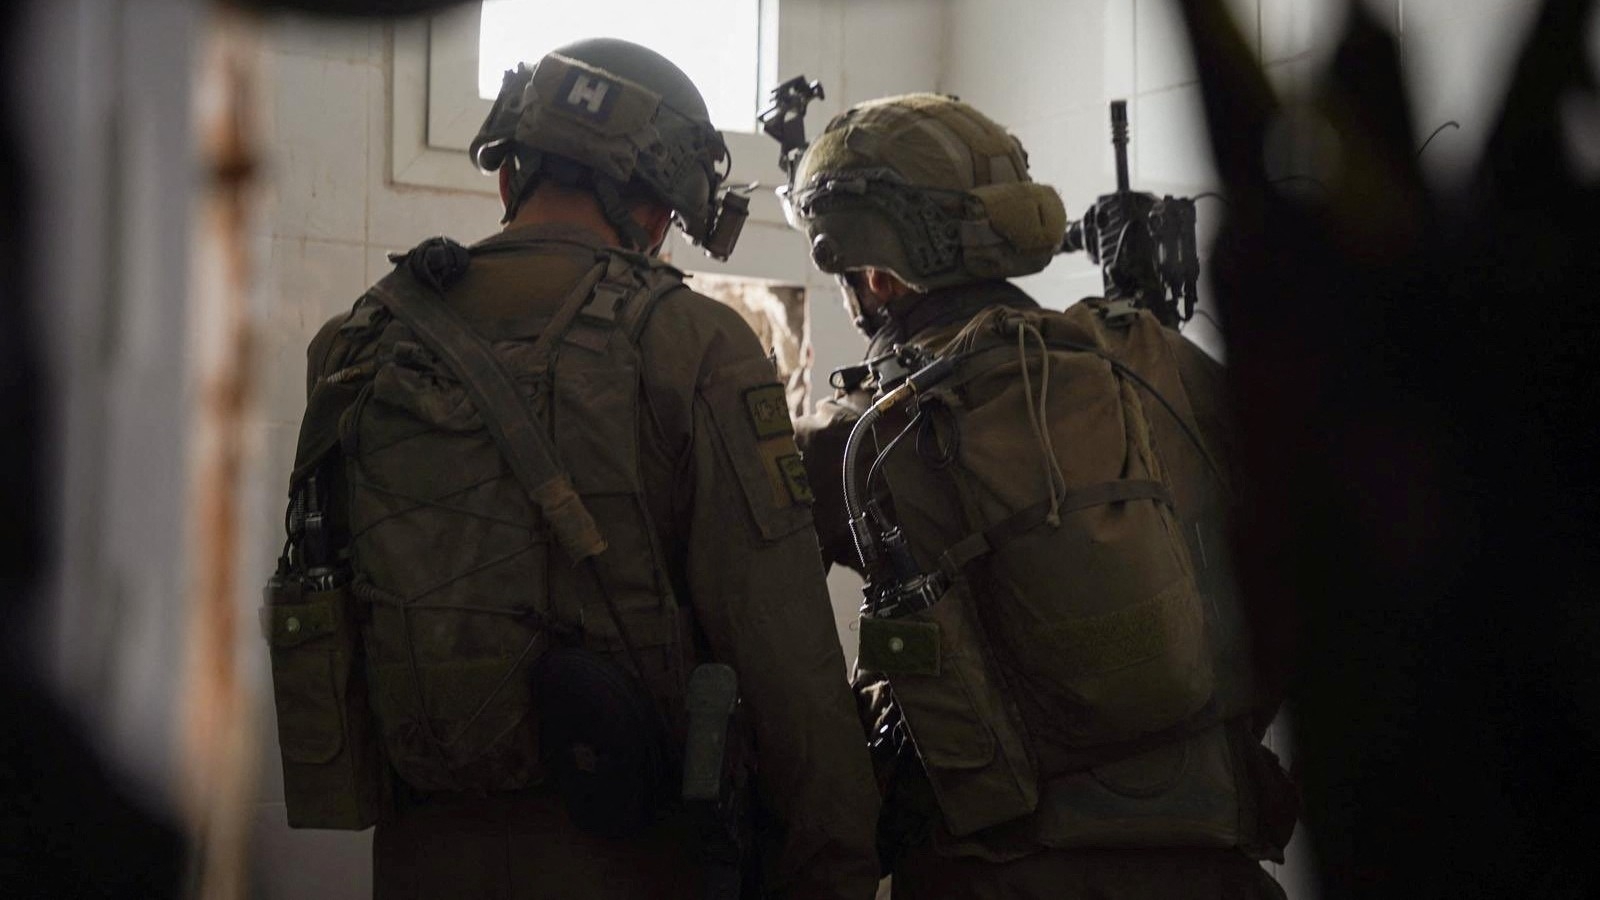 Israeli soldiers inside a building in Gaza